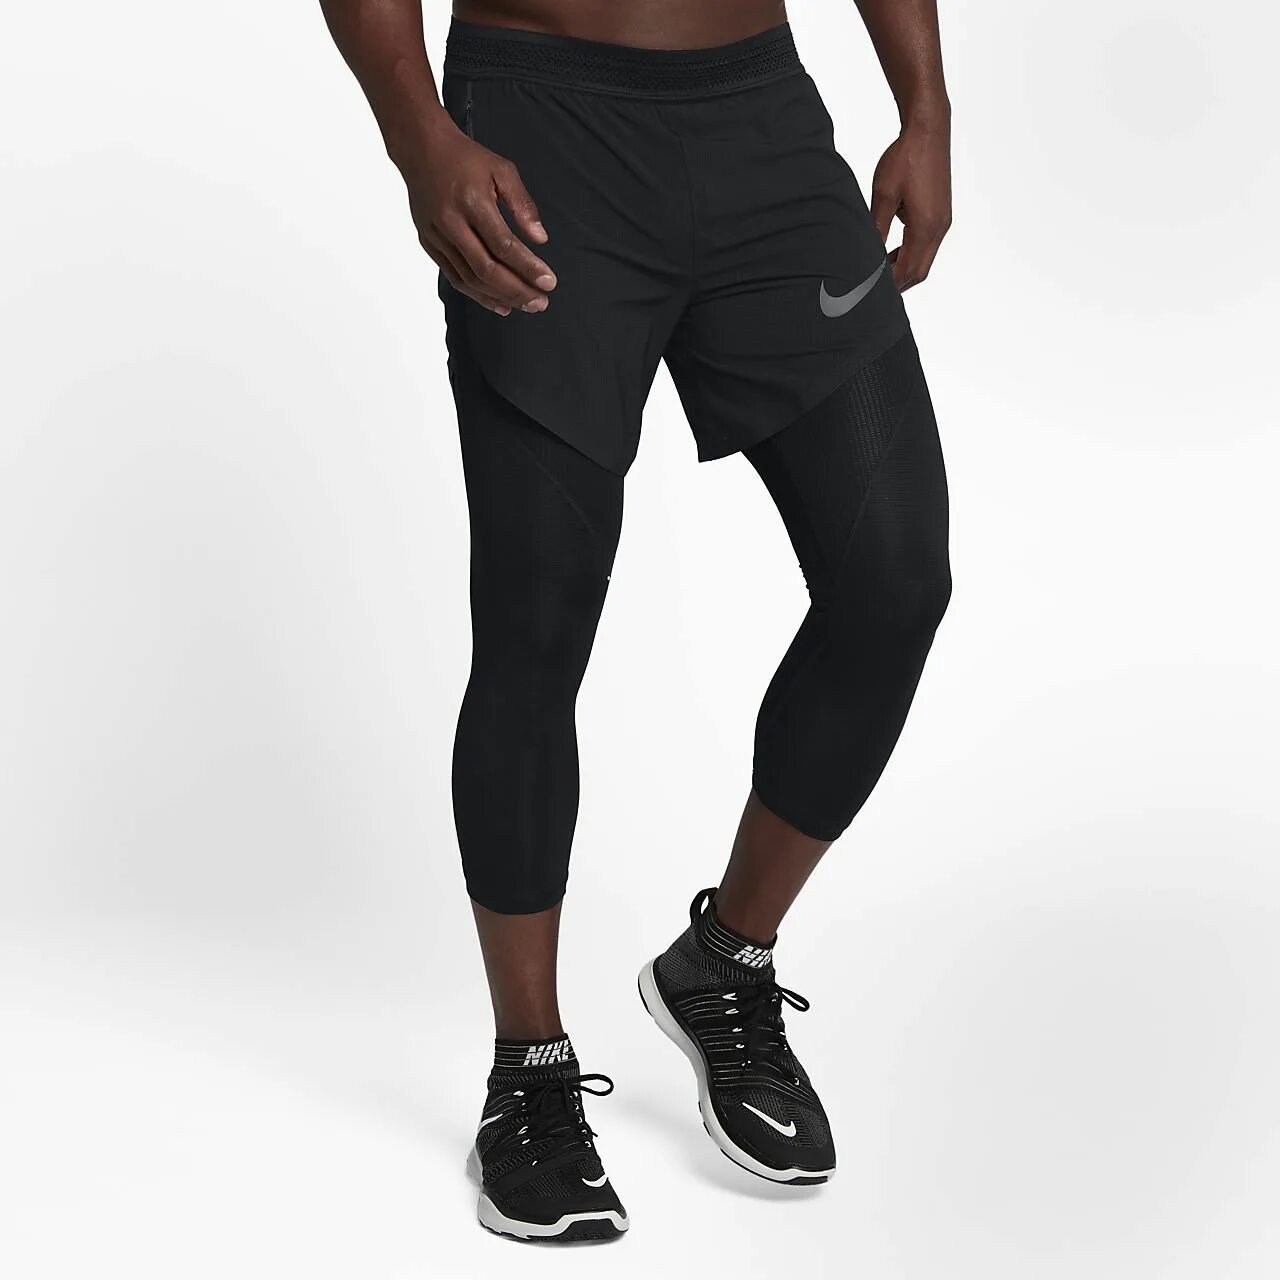 Тайтсы Nike Hypercool мужские. Nike Training тайтсы и шорты. Nike Training Flex 2 in 1 short. Шорты с тайтсами мужские Nike.